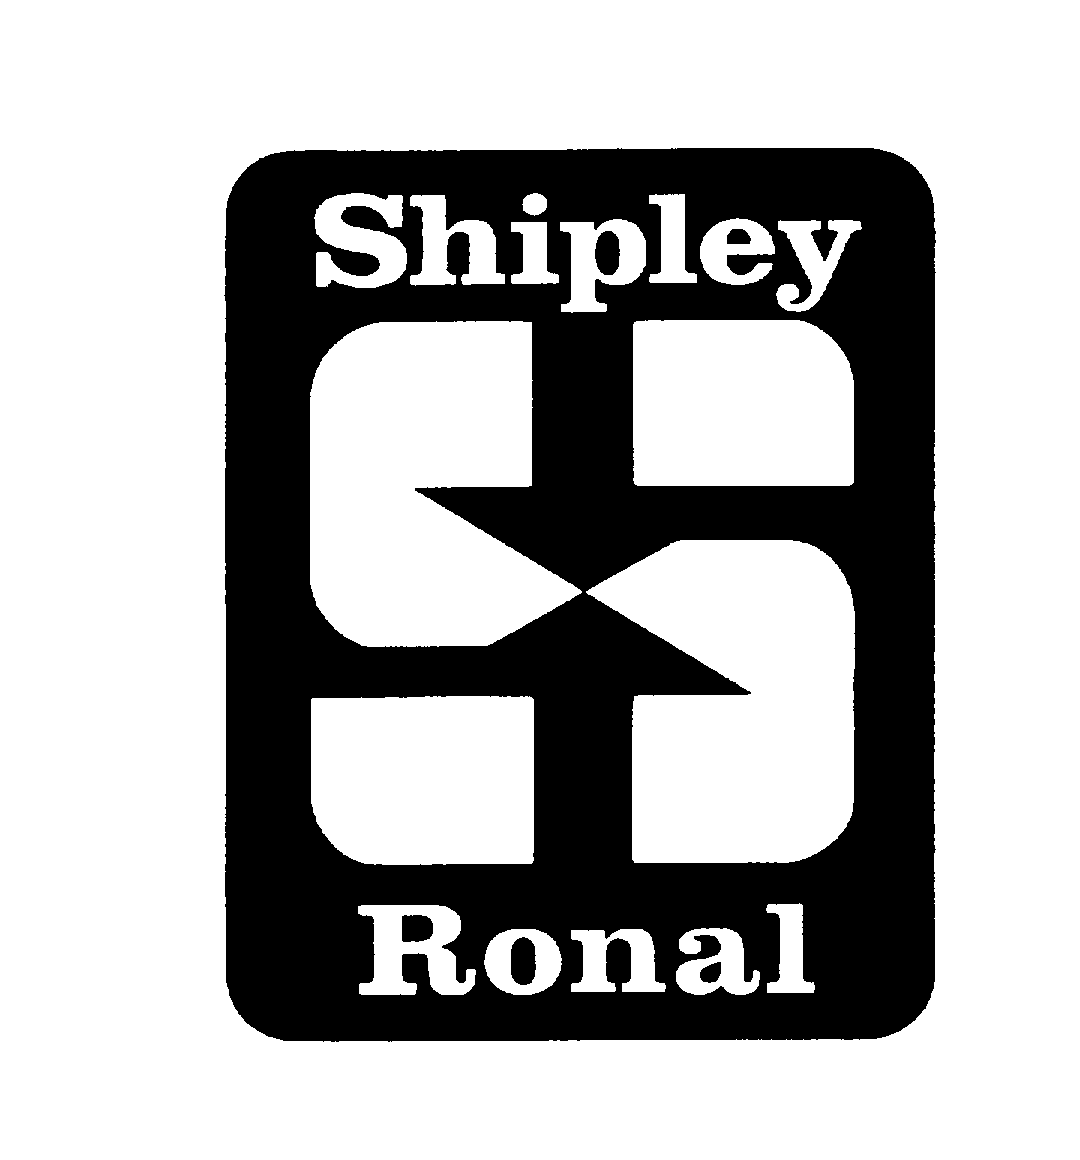  SHIPLEY RONAL